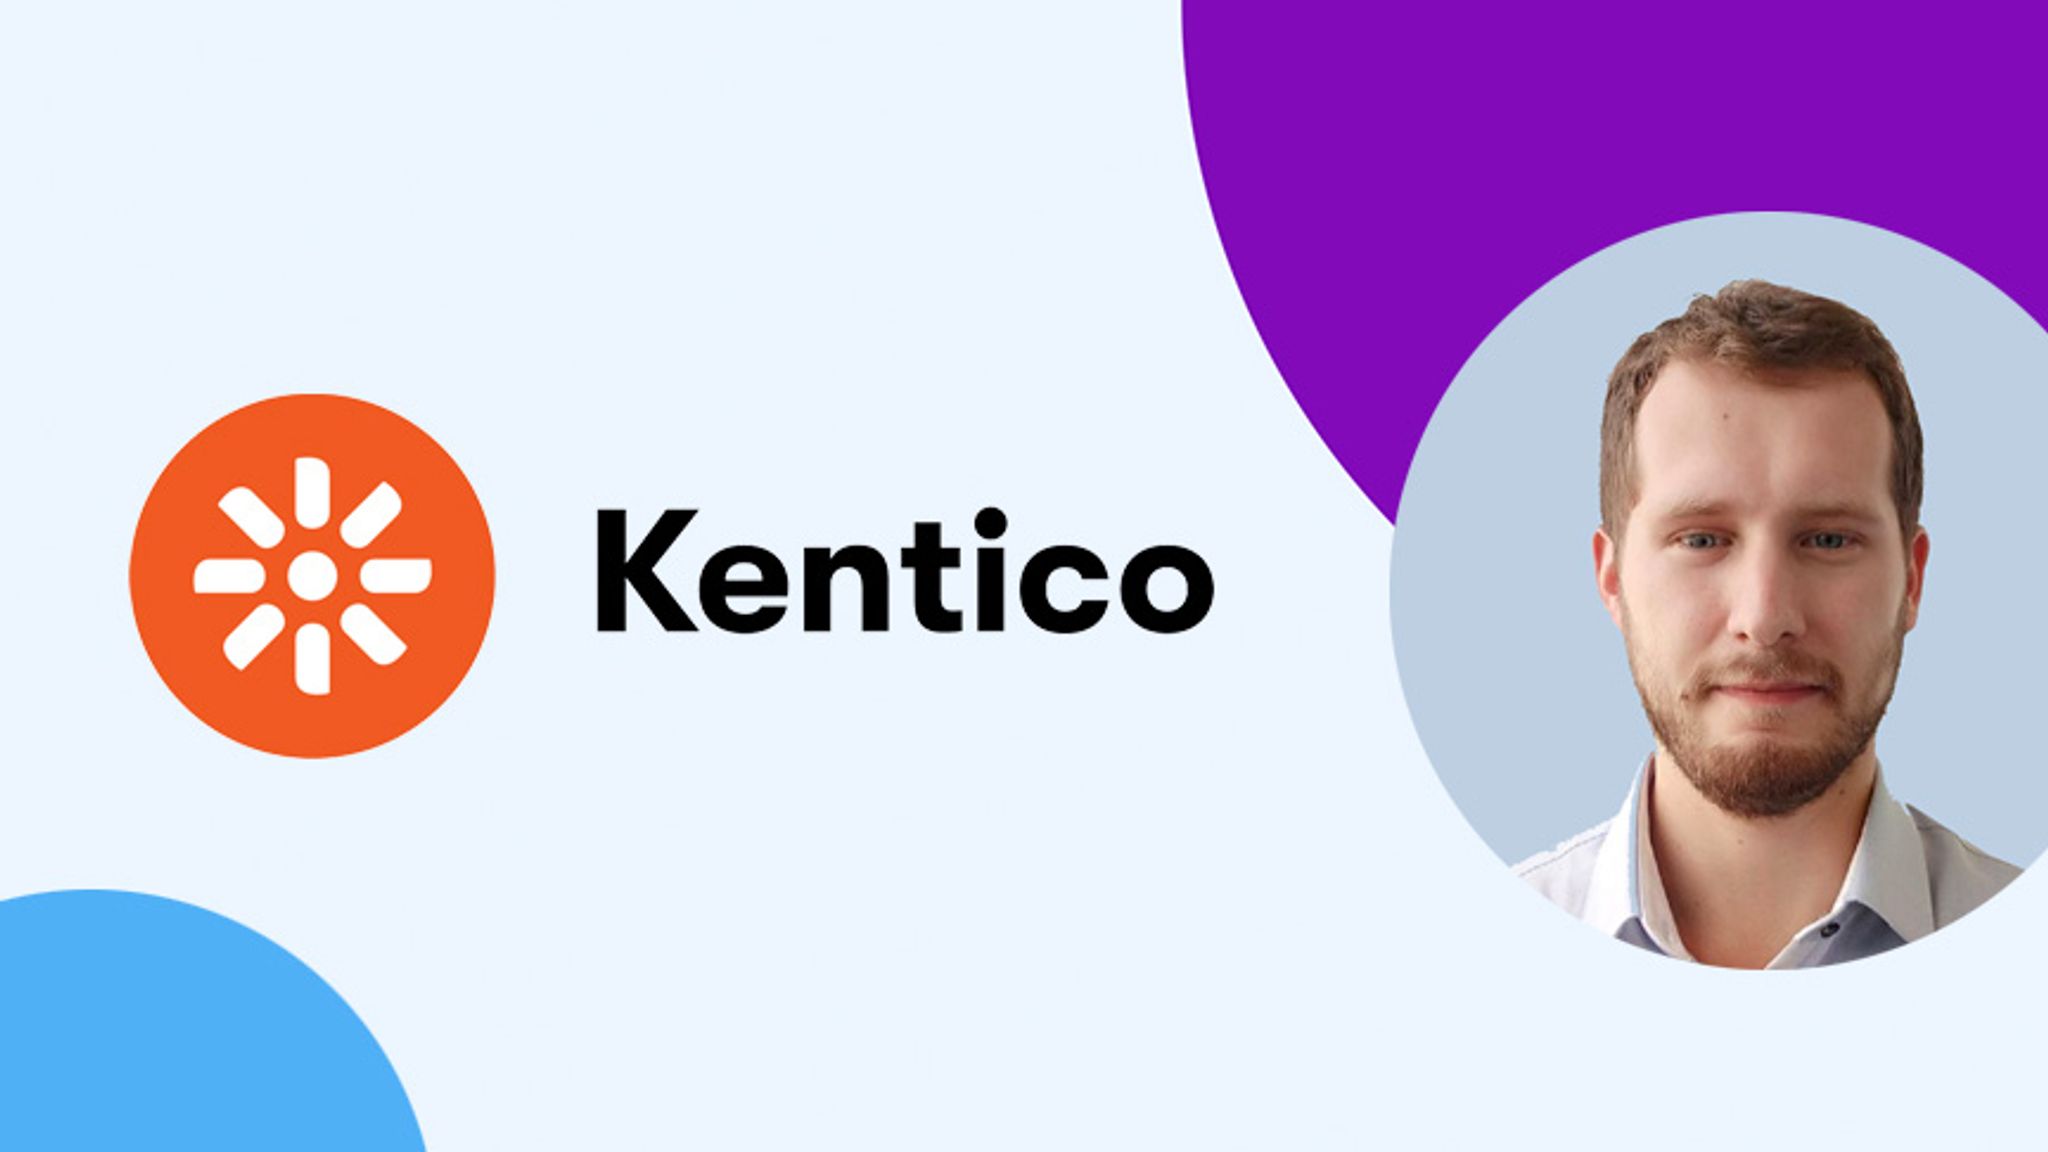 Kentico featured image with new CFO headshot